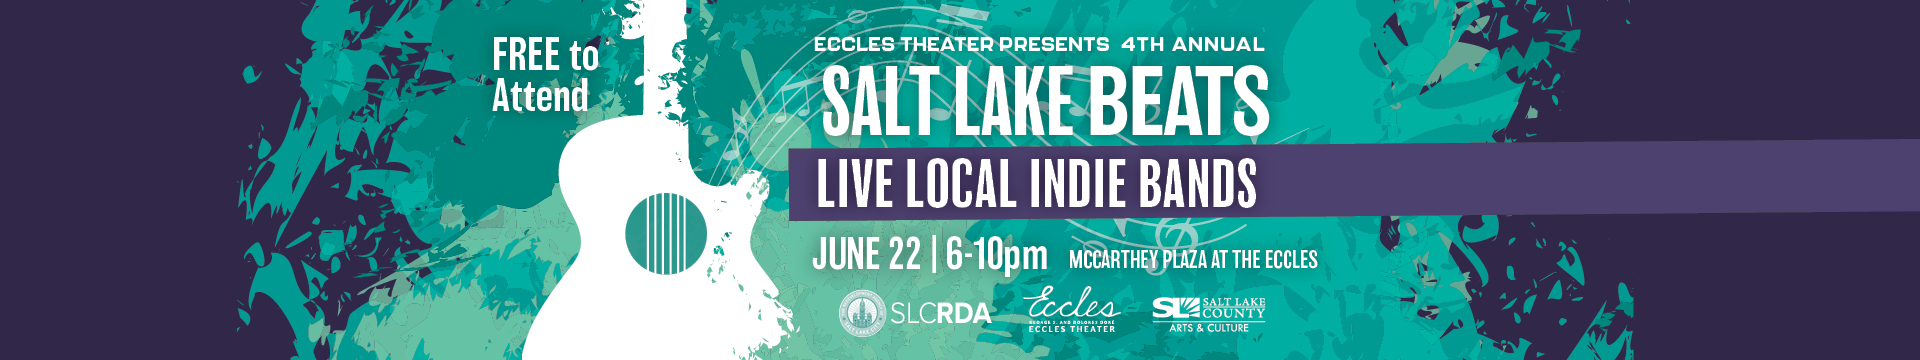 Salt Lake Beats June 22